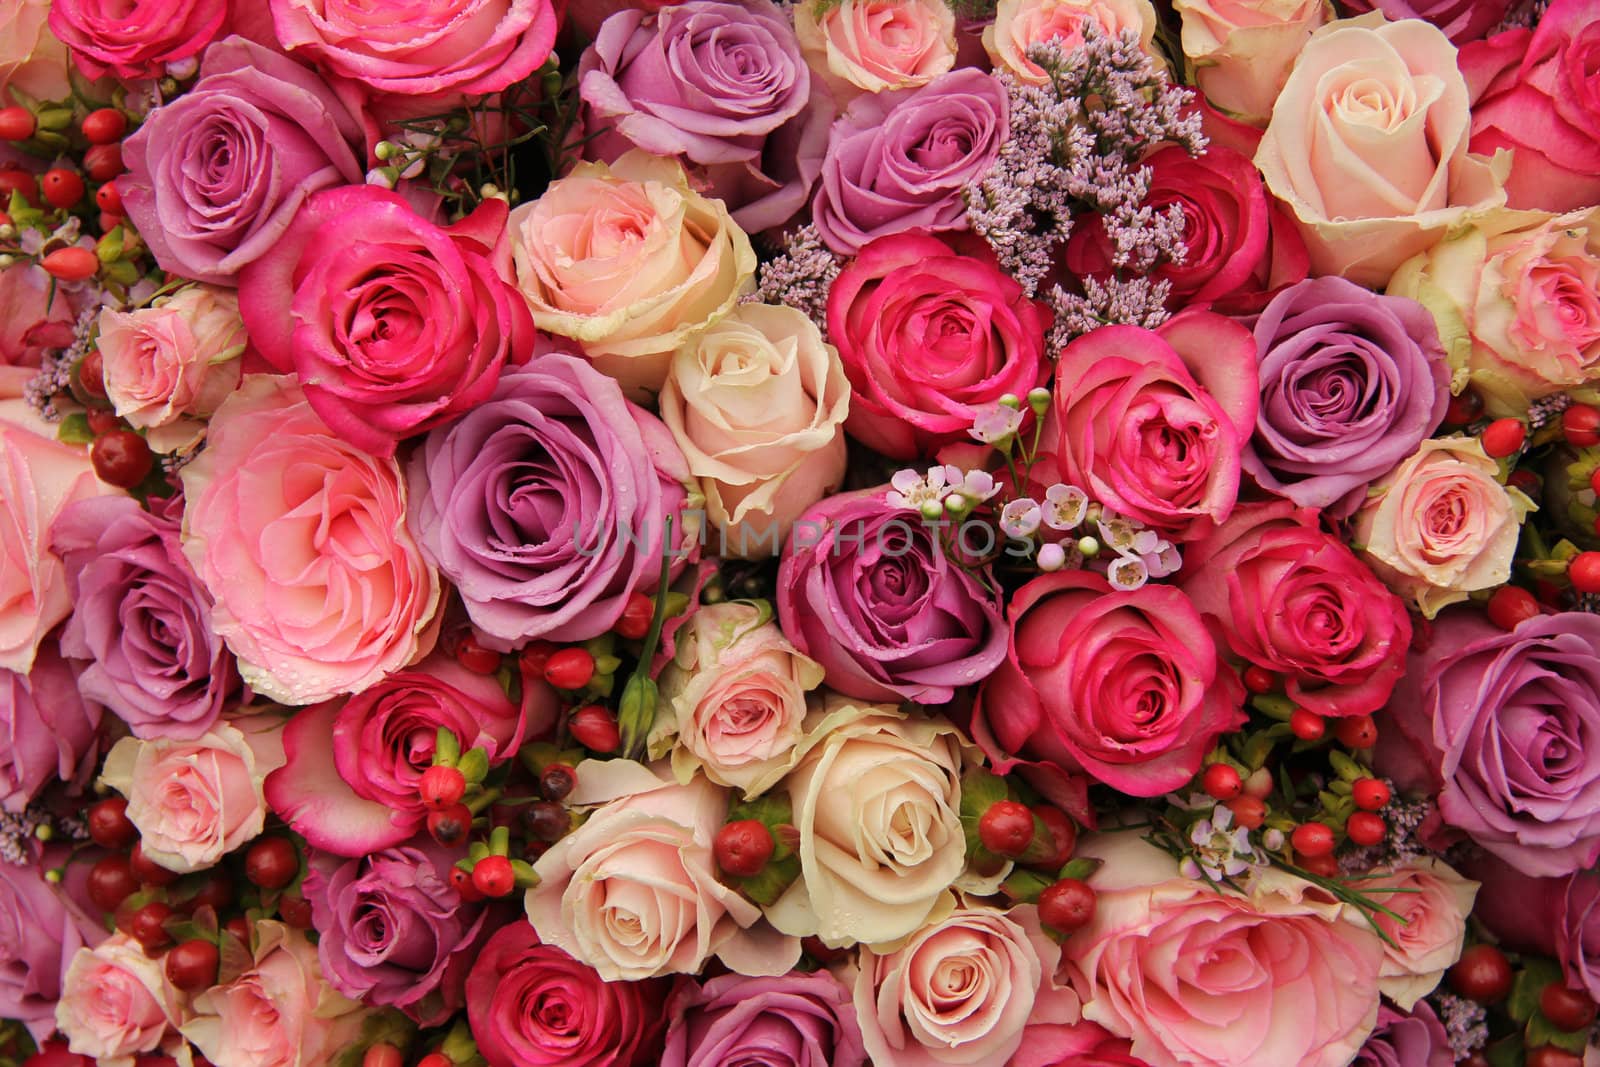 purple and pink roses wedding arrangement by studioportosabbia